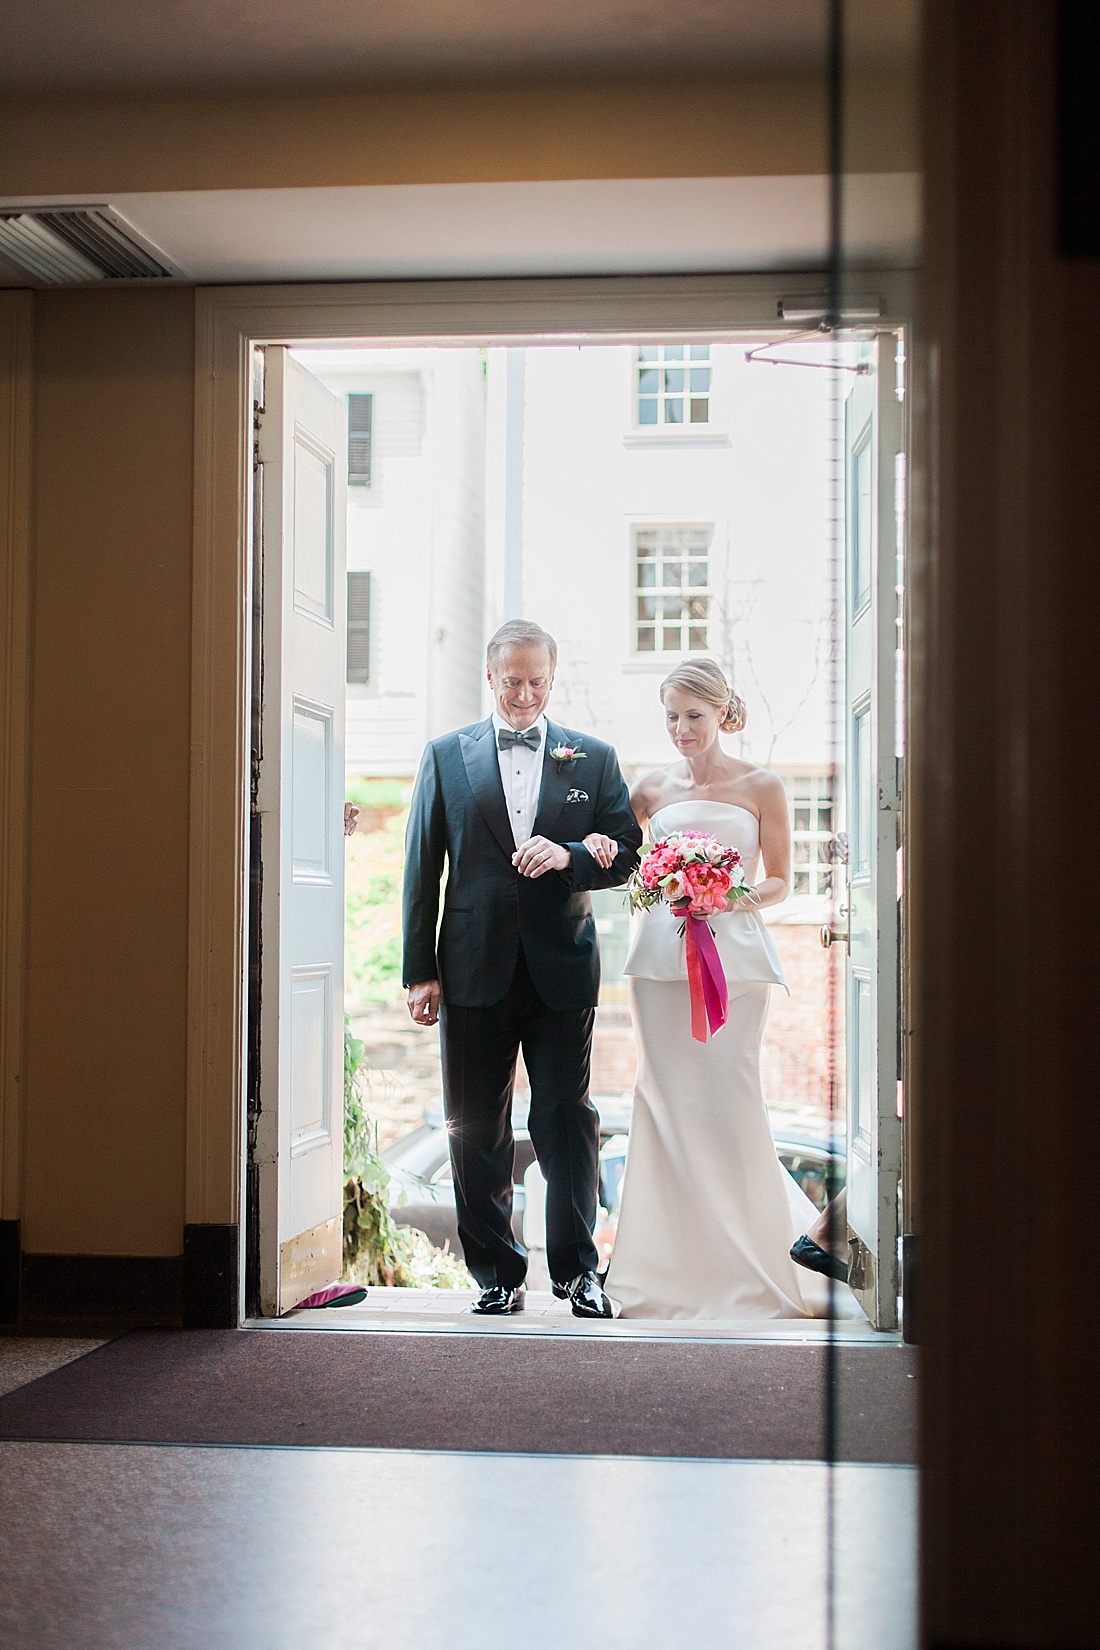 Decatur House wedding | Washington, DC | Abby Grace Photography